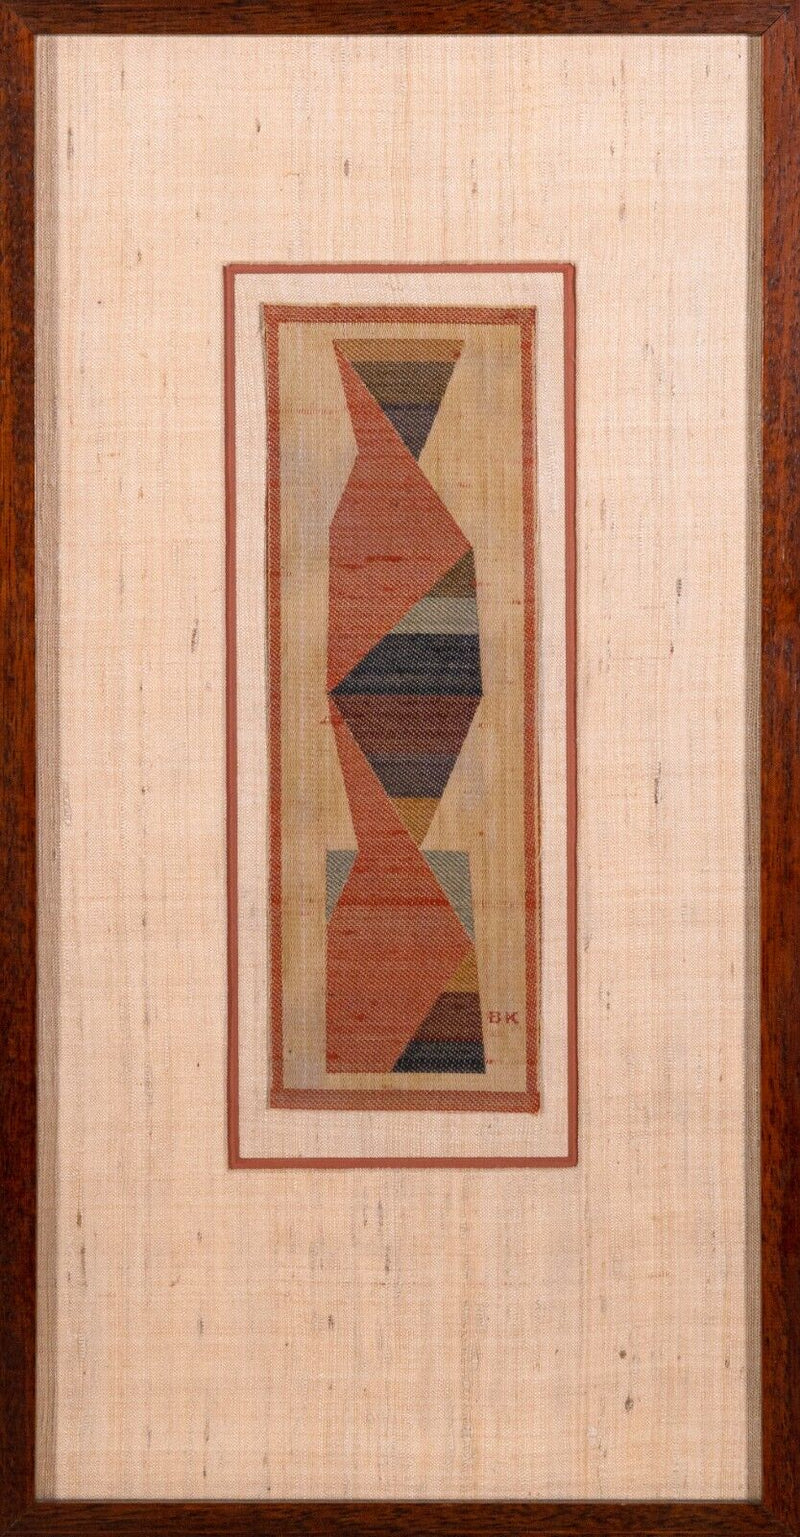 Boris Kroll Mid Century Modern Woven Fabric Monogram BK Signed Verso Framed 1965